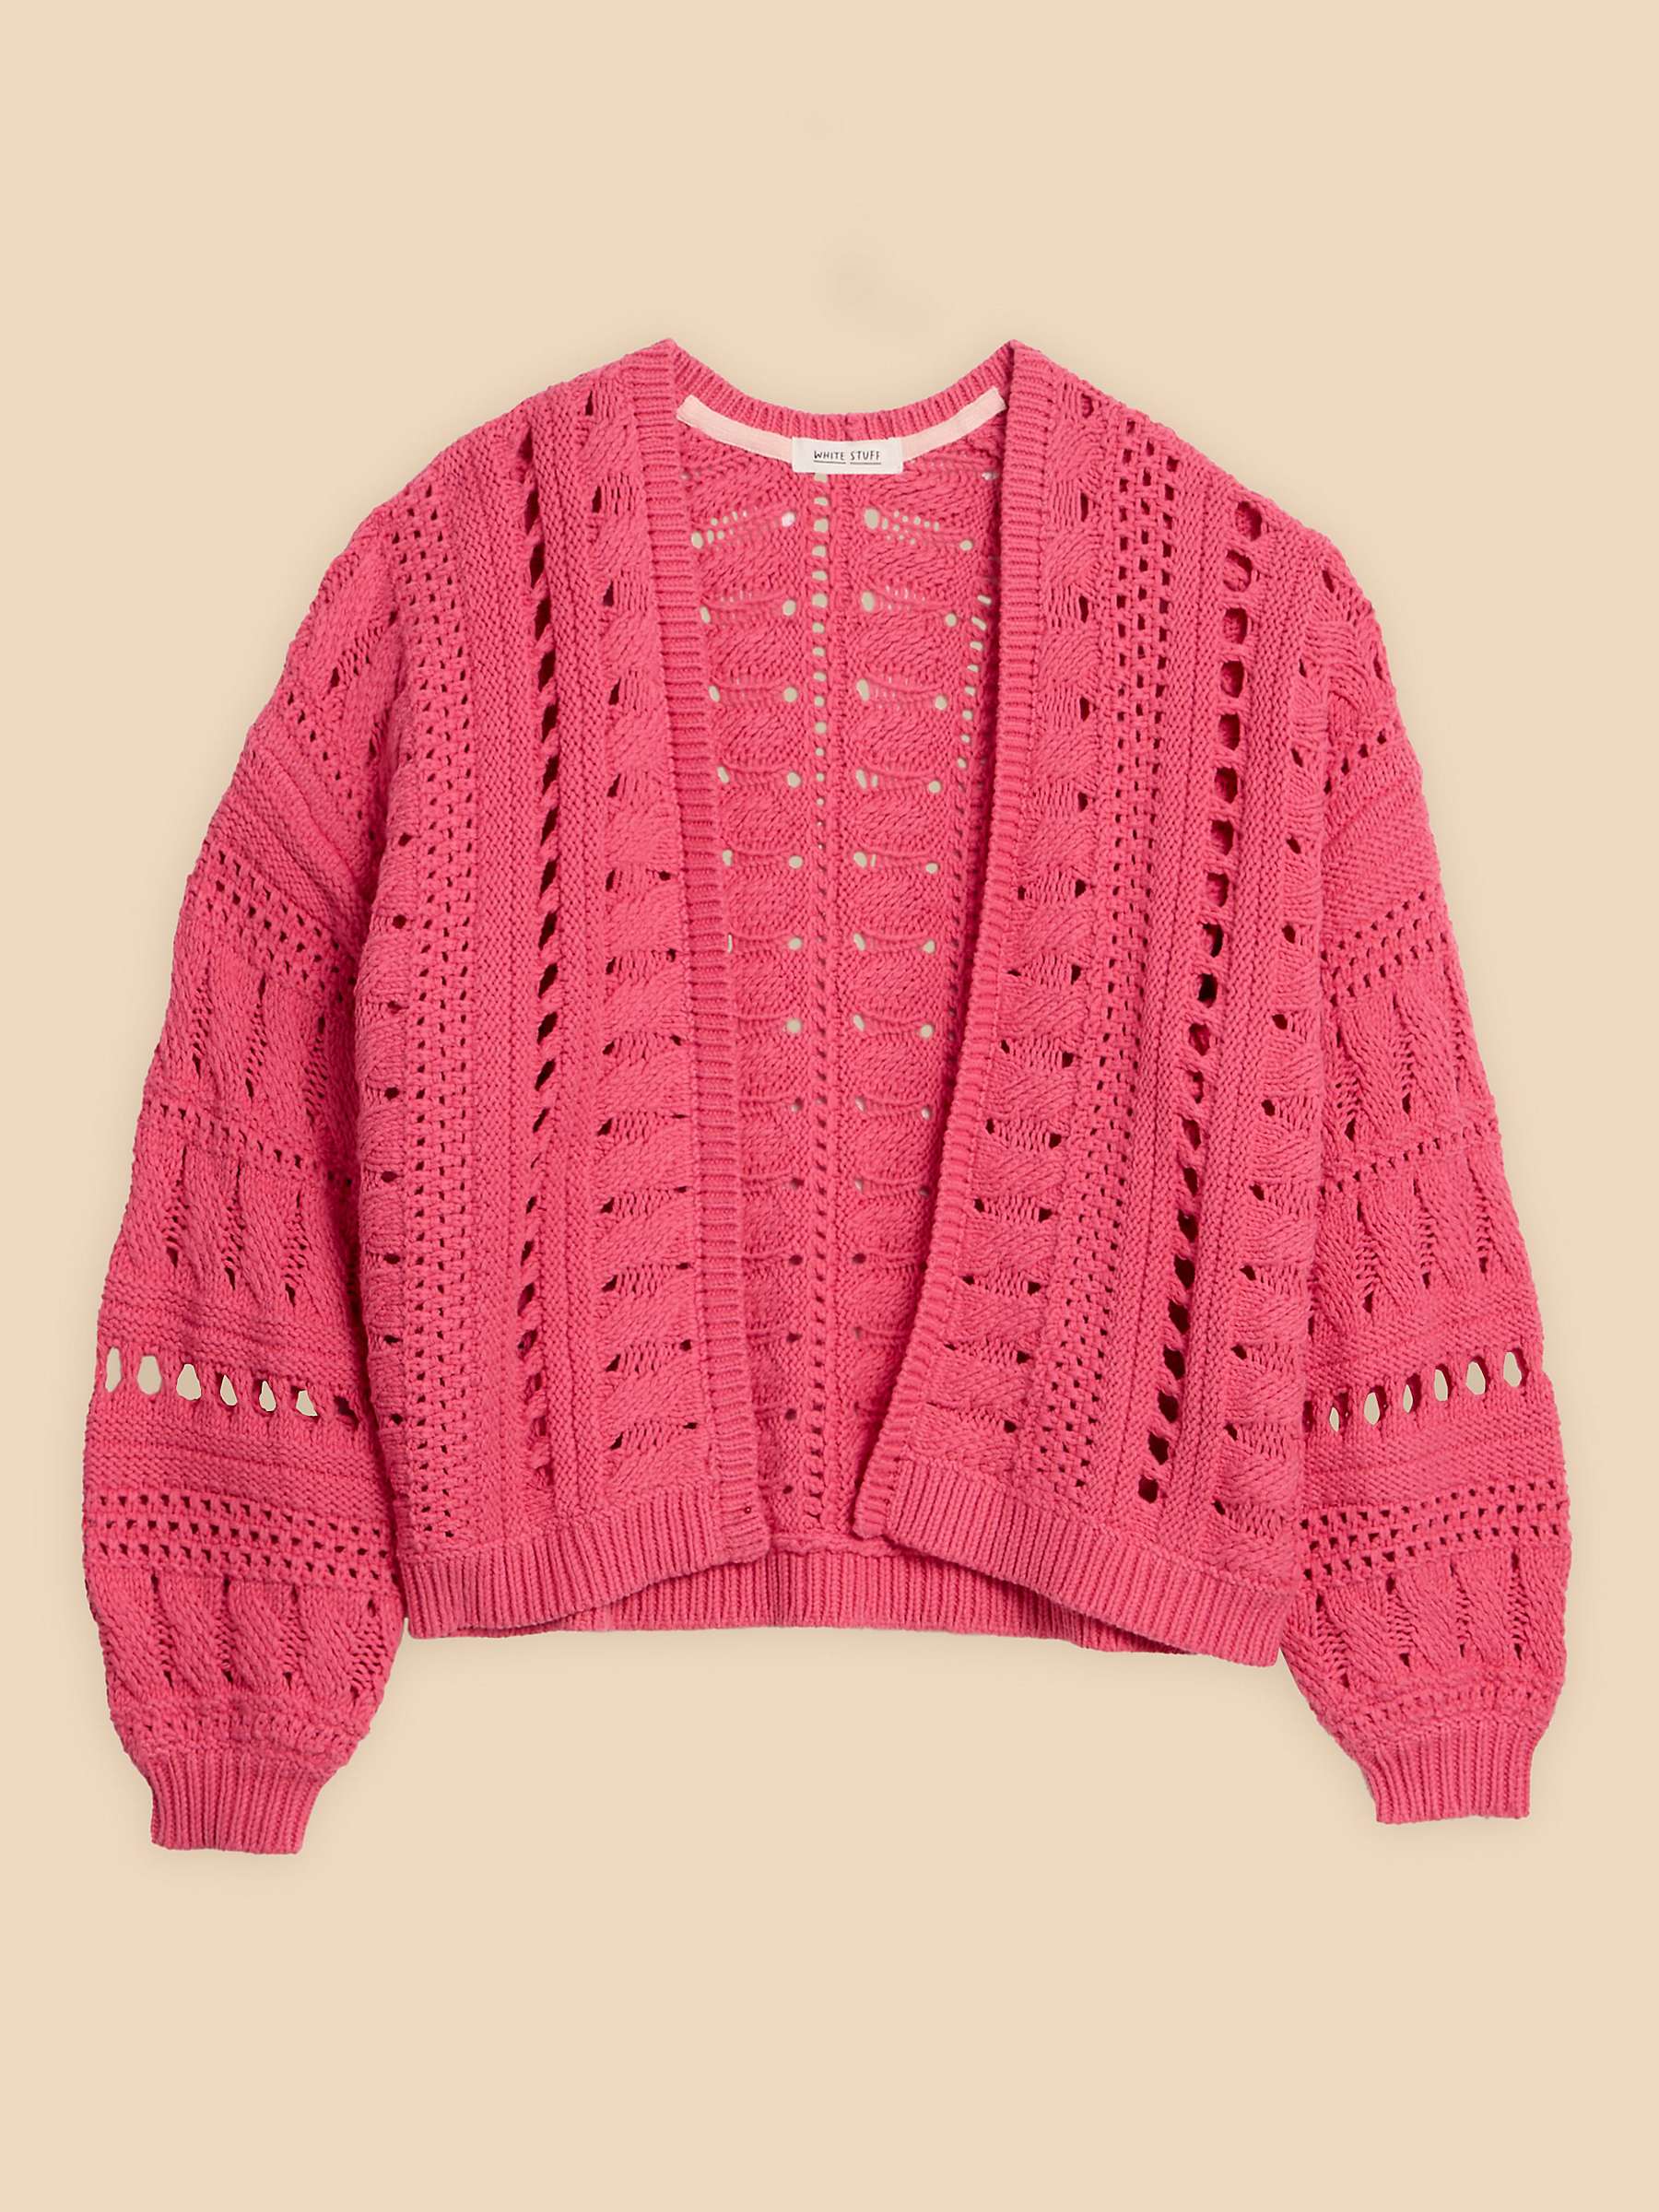 Buy White Stuff Casey Crochet Cardigan, Bright Pink Online at johnlewis.com